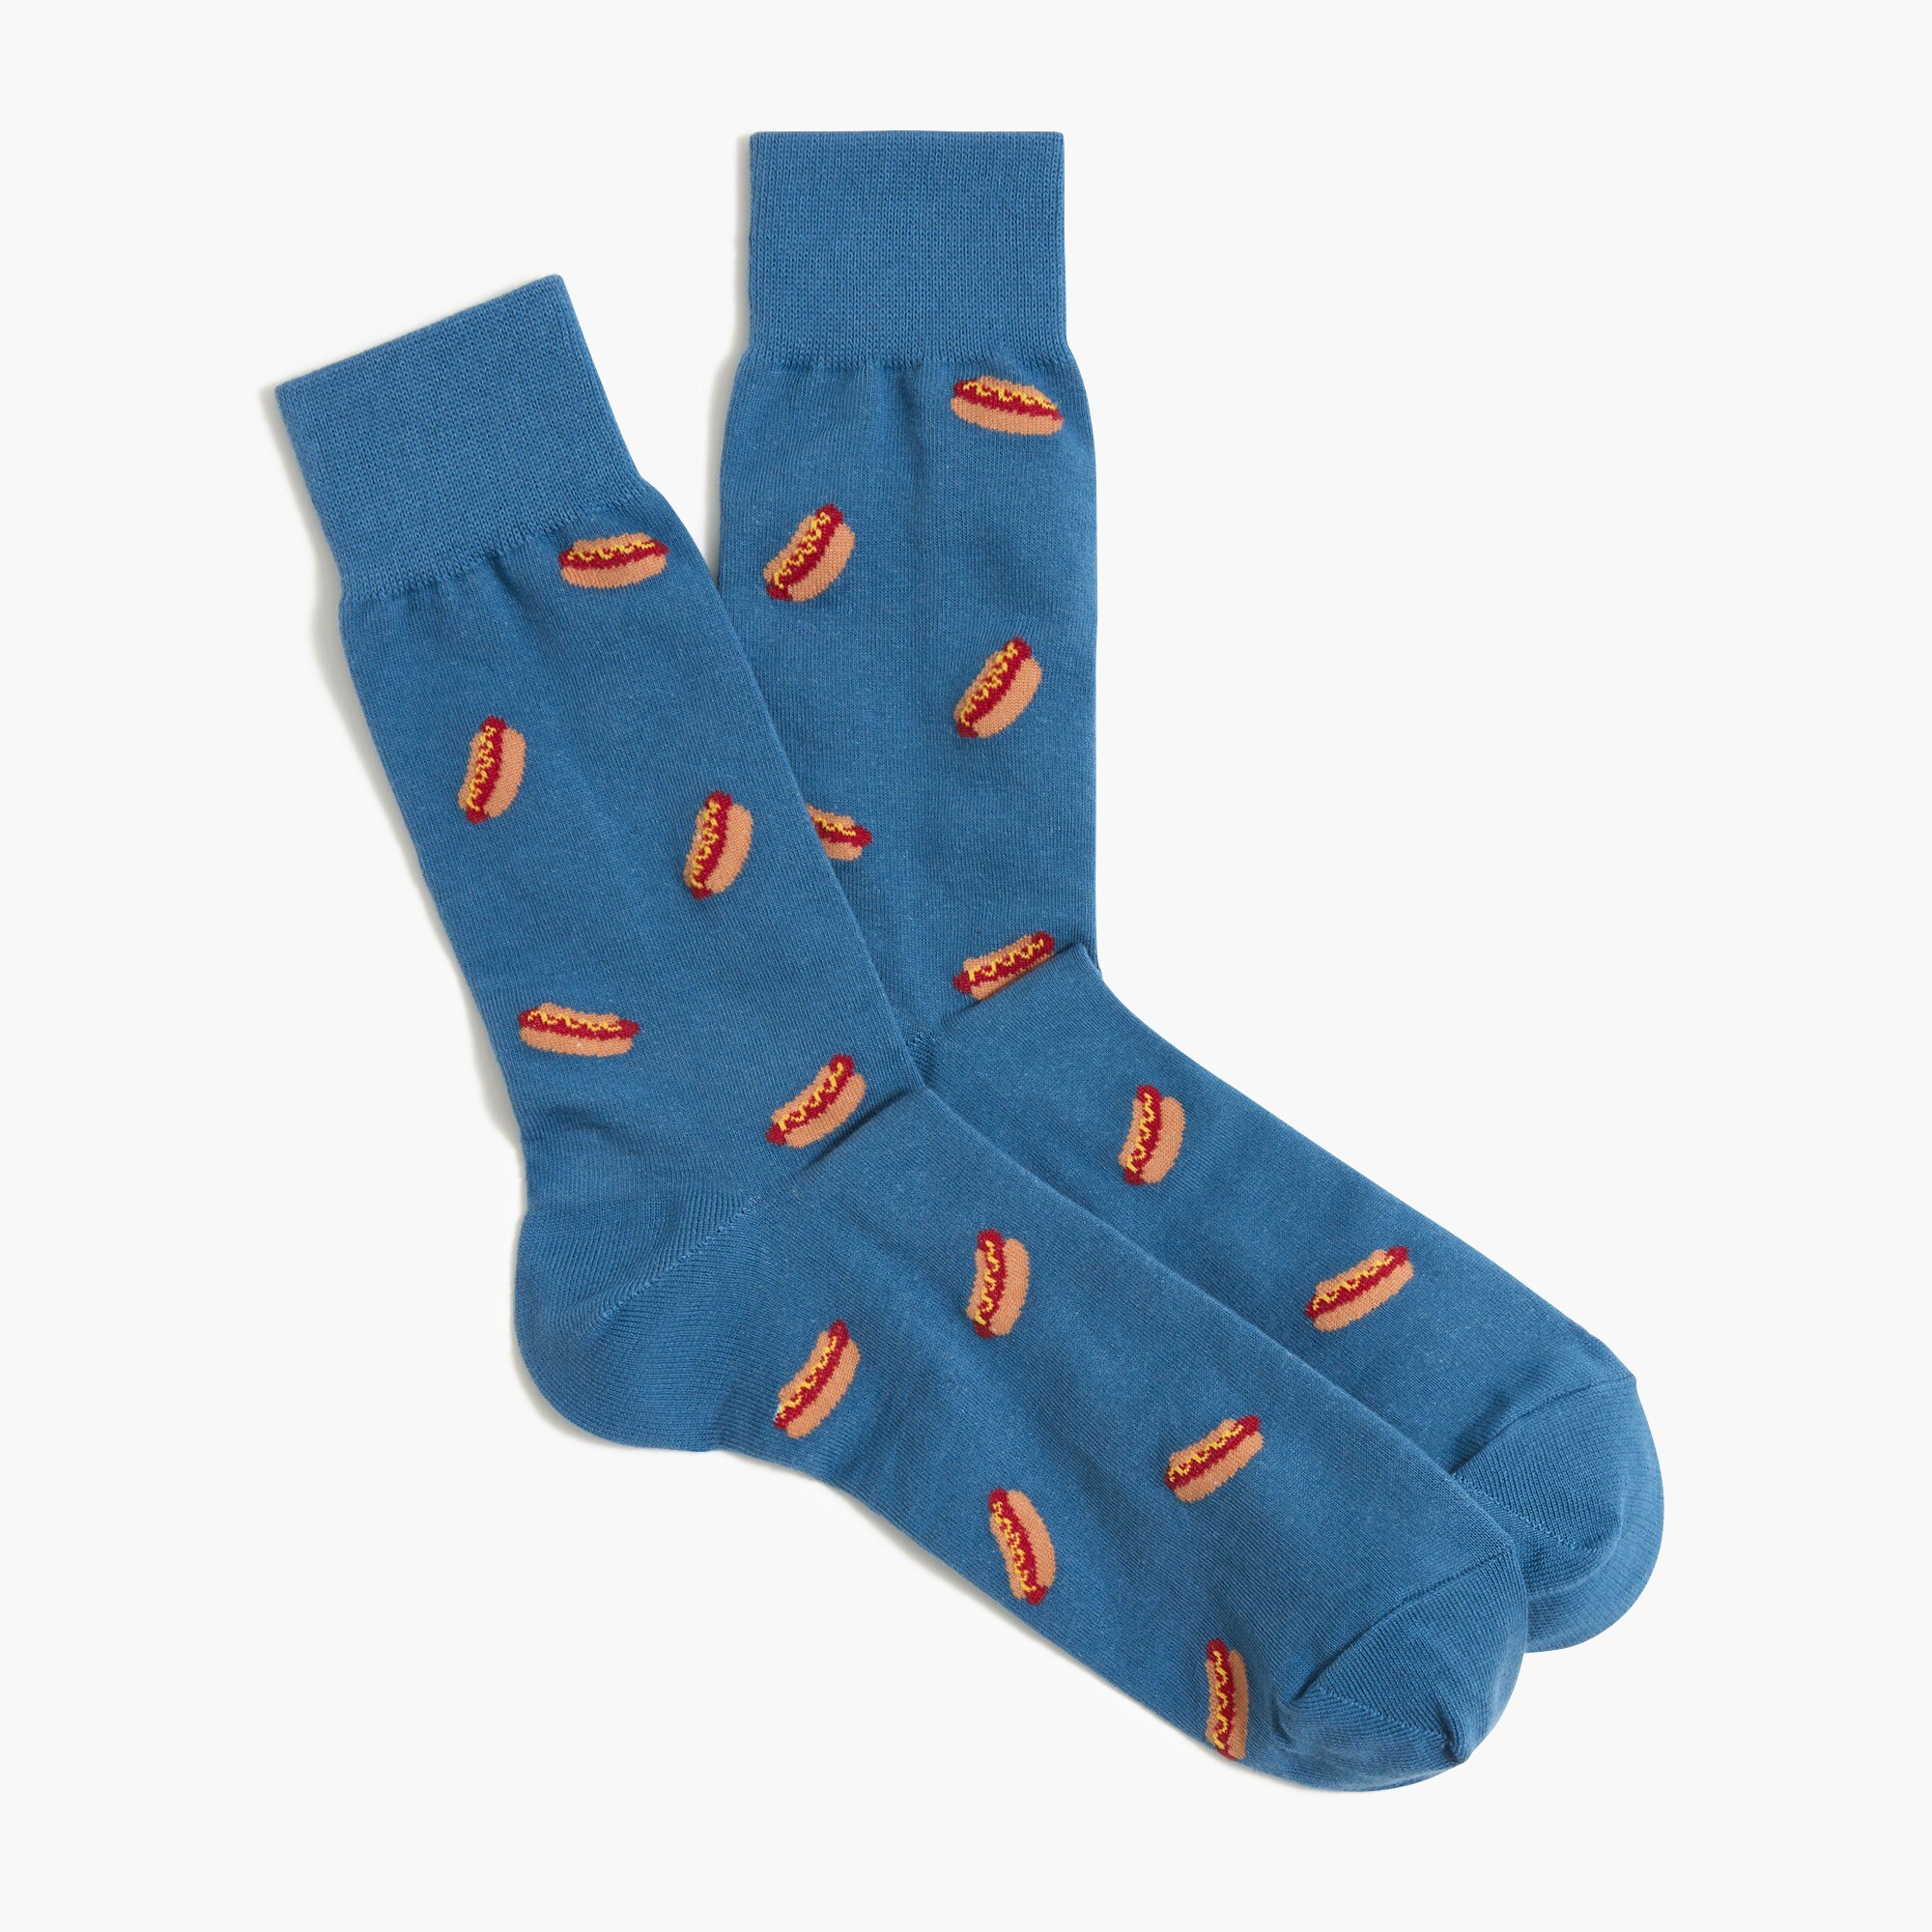 mens Hot dog socks